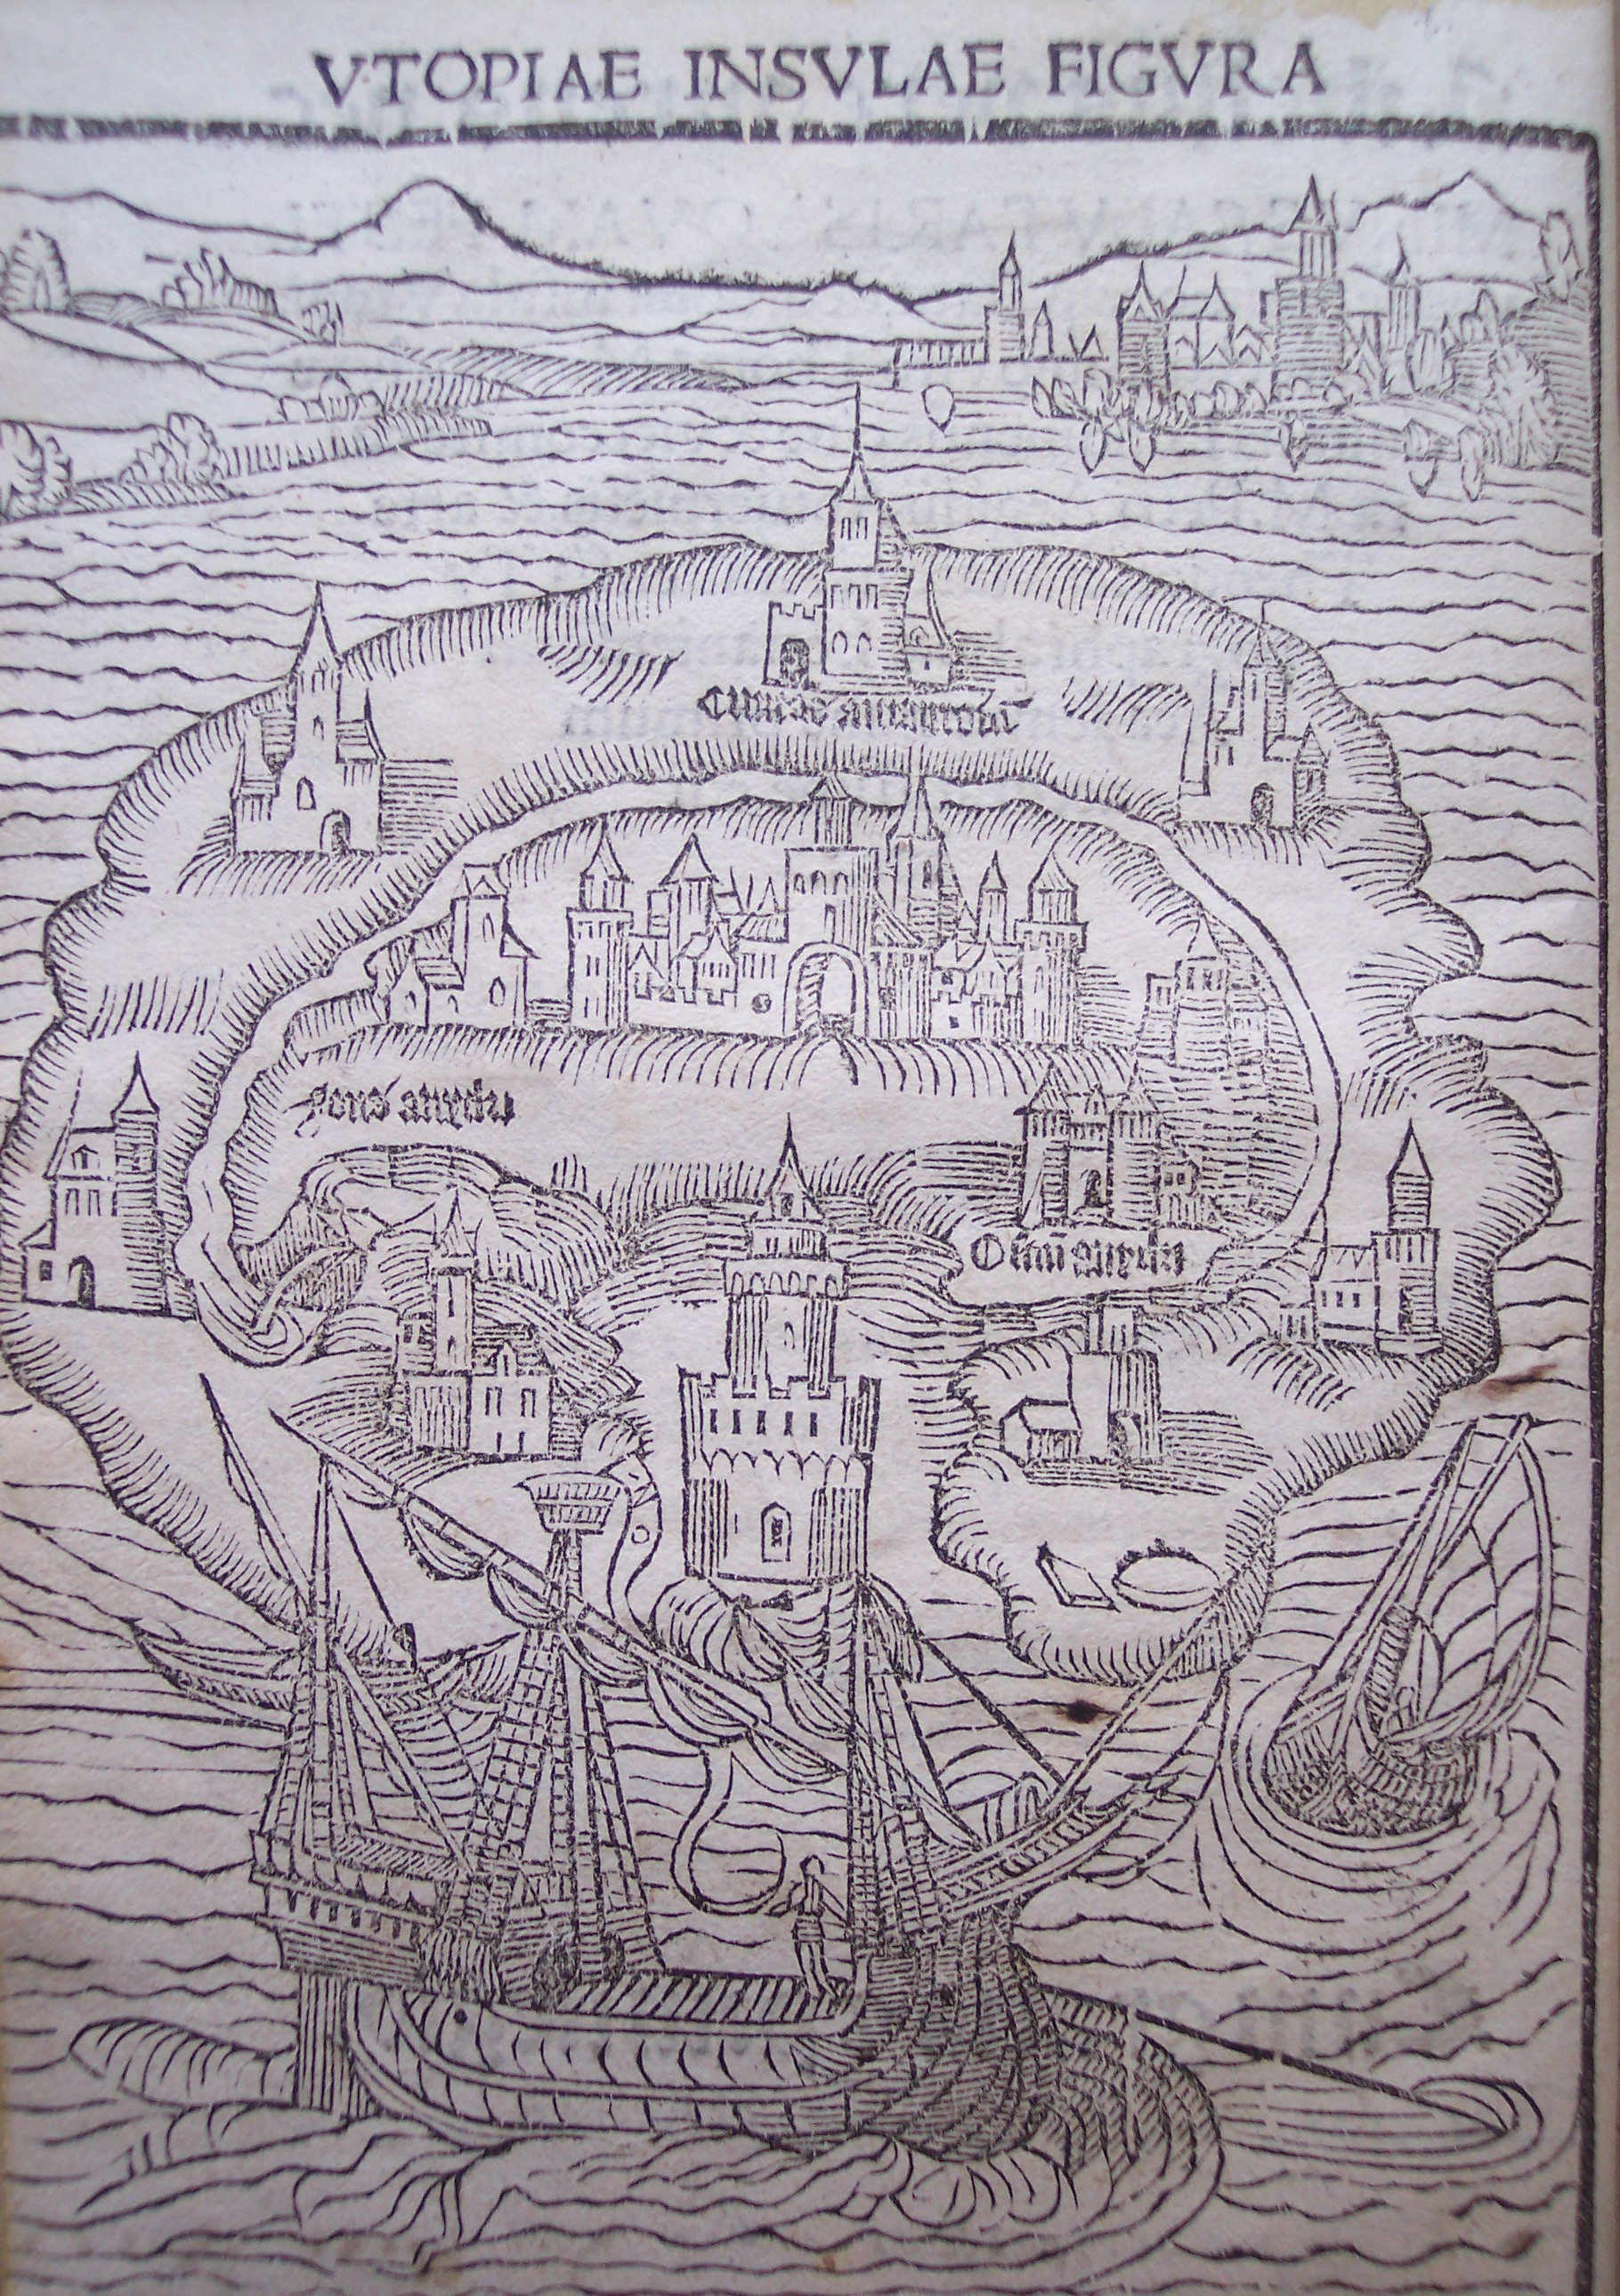 BT1.130.9(1), title page verso, Thomas More’s Utopia (1516)